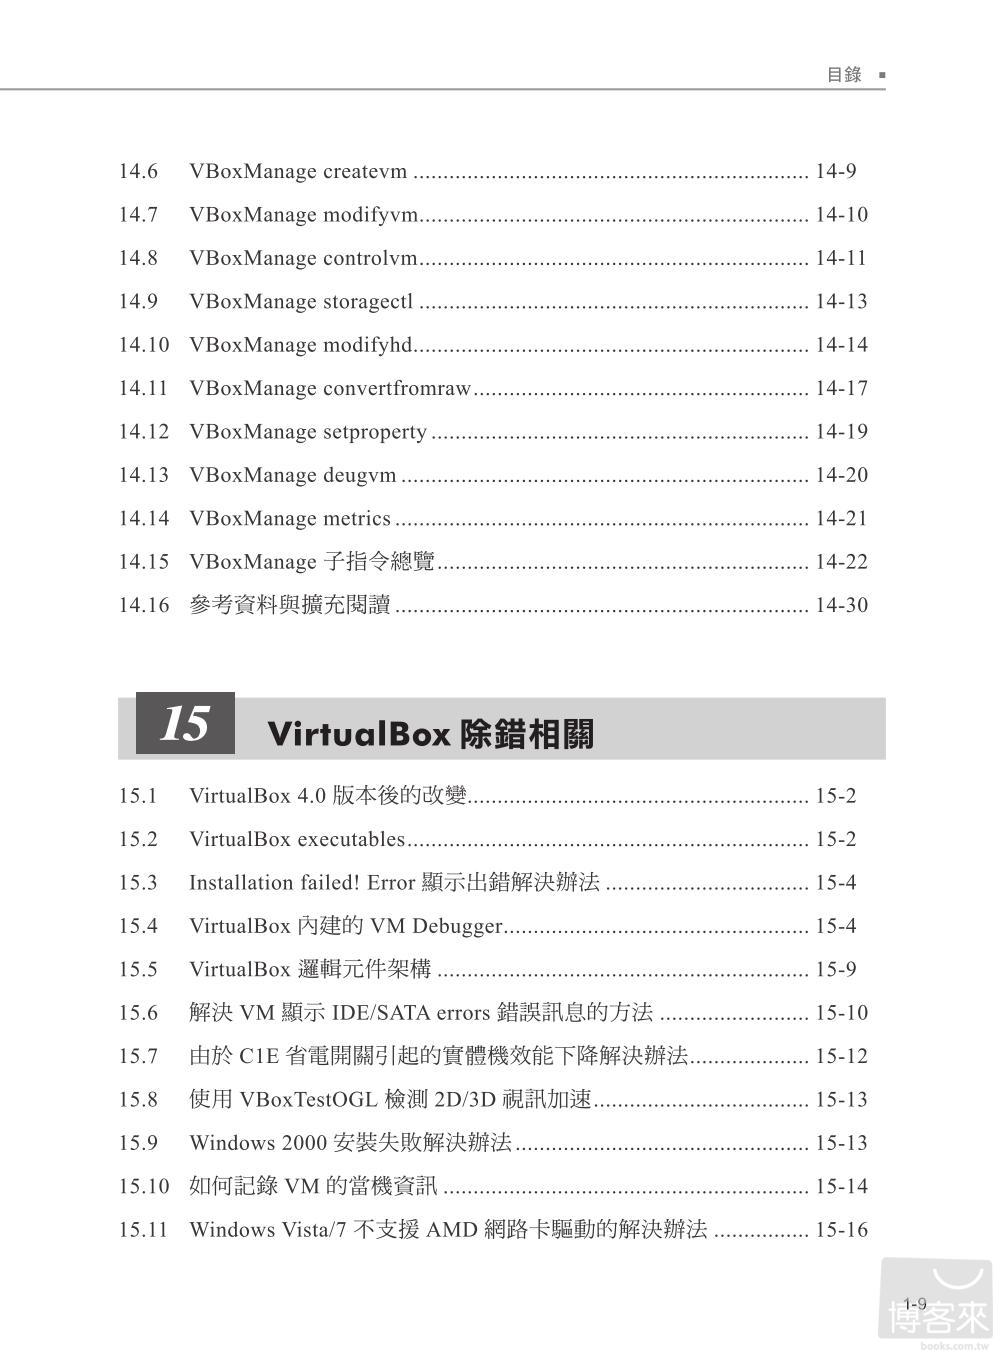 ►GO►最新優惠► 【書籍】直接單挑VMWare：免費Oracle VirtualBox最完整實戰聖書